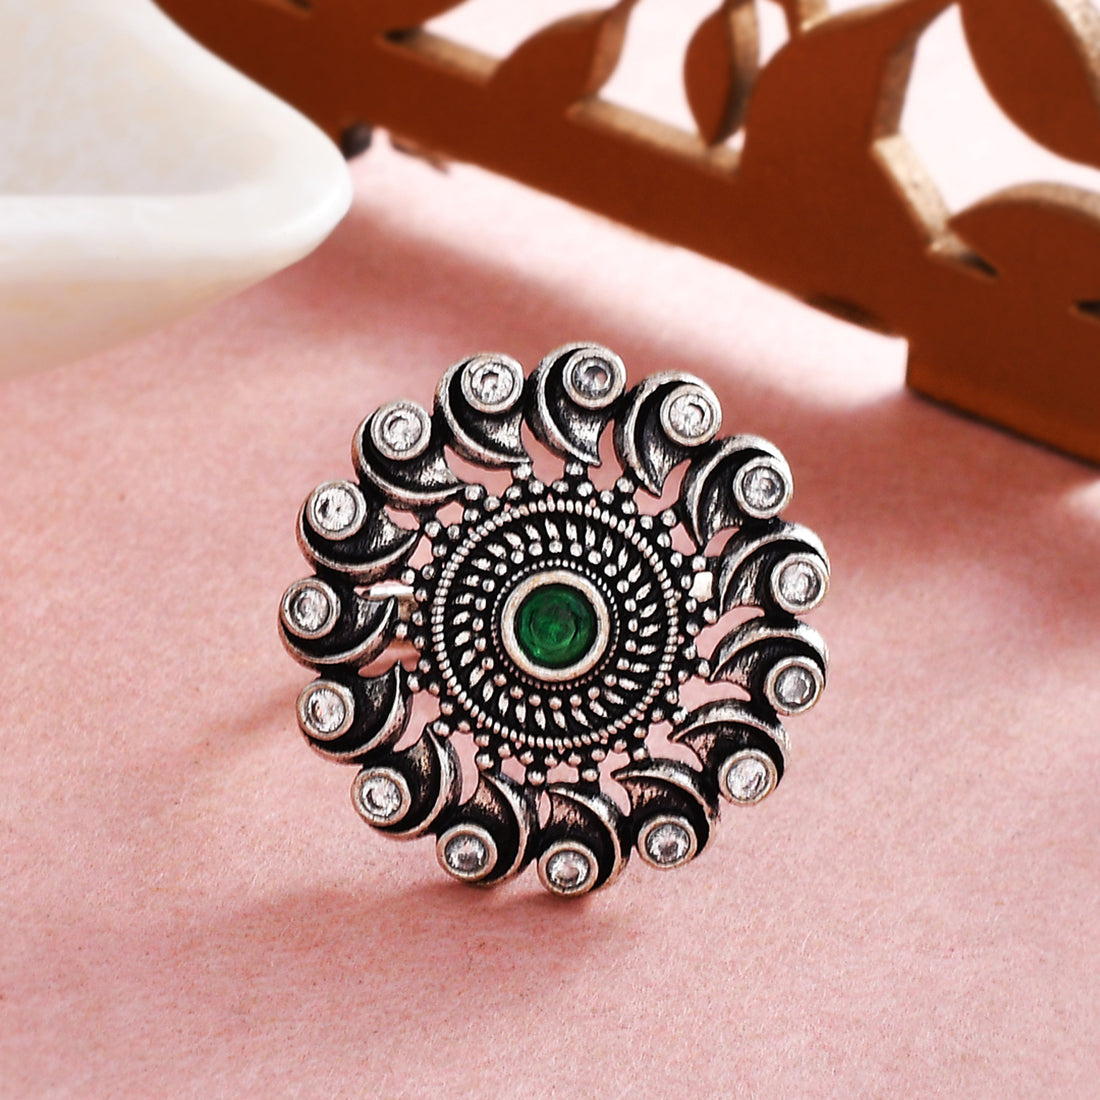 Women's Abharan Green And White Round Cut Stones Ring - Voylla